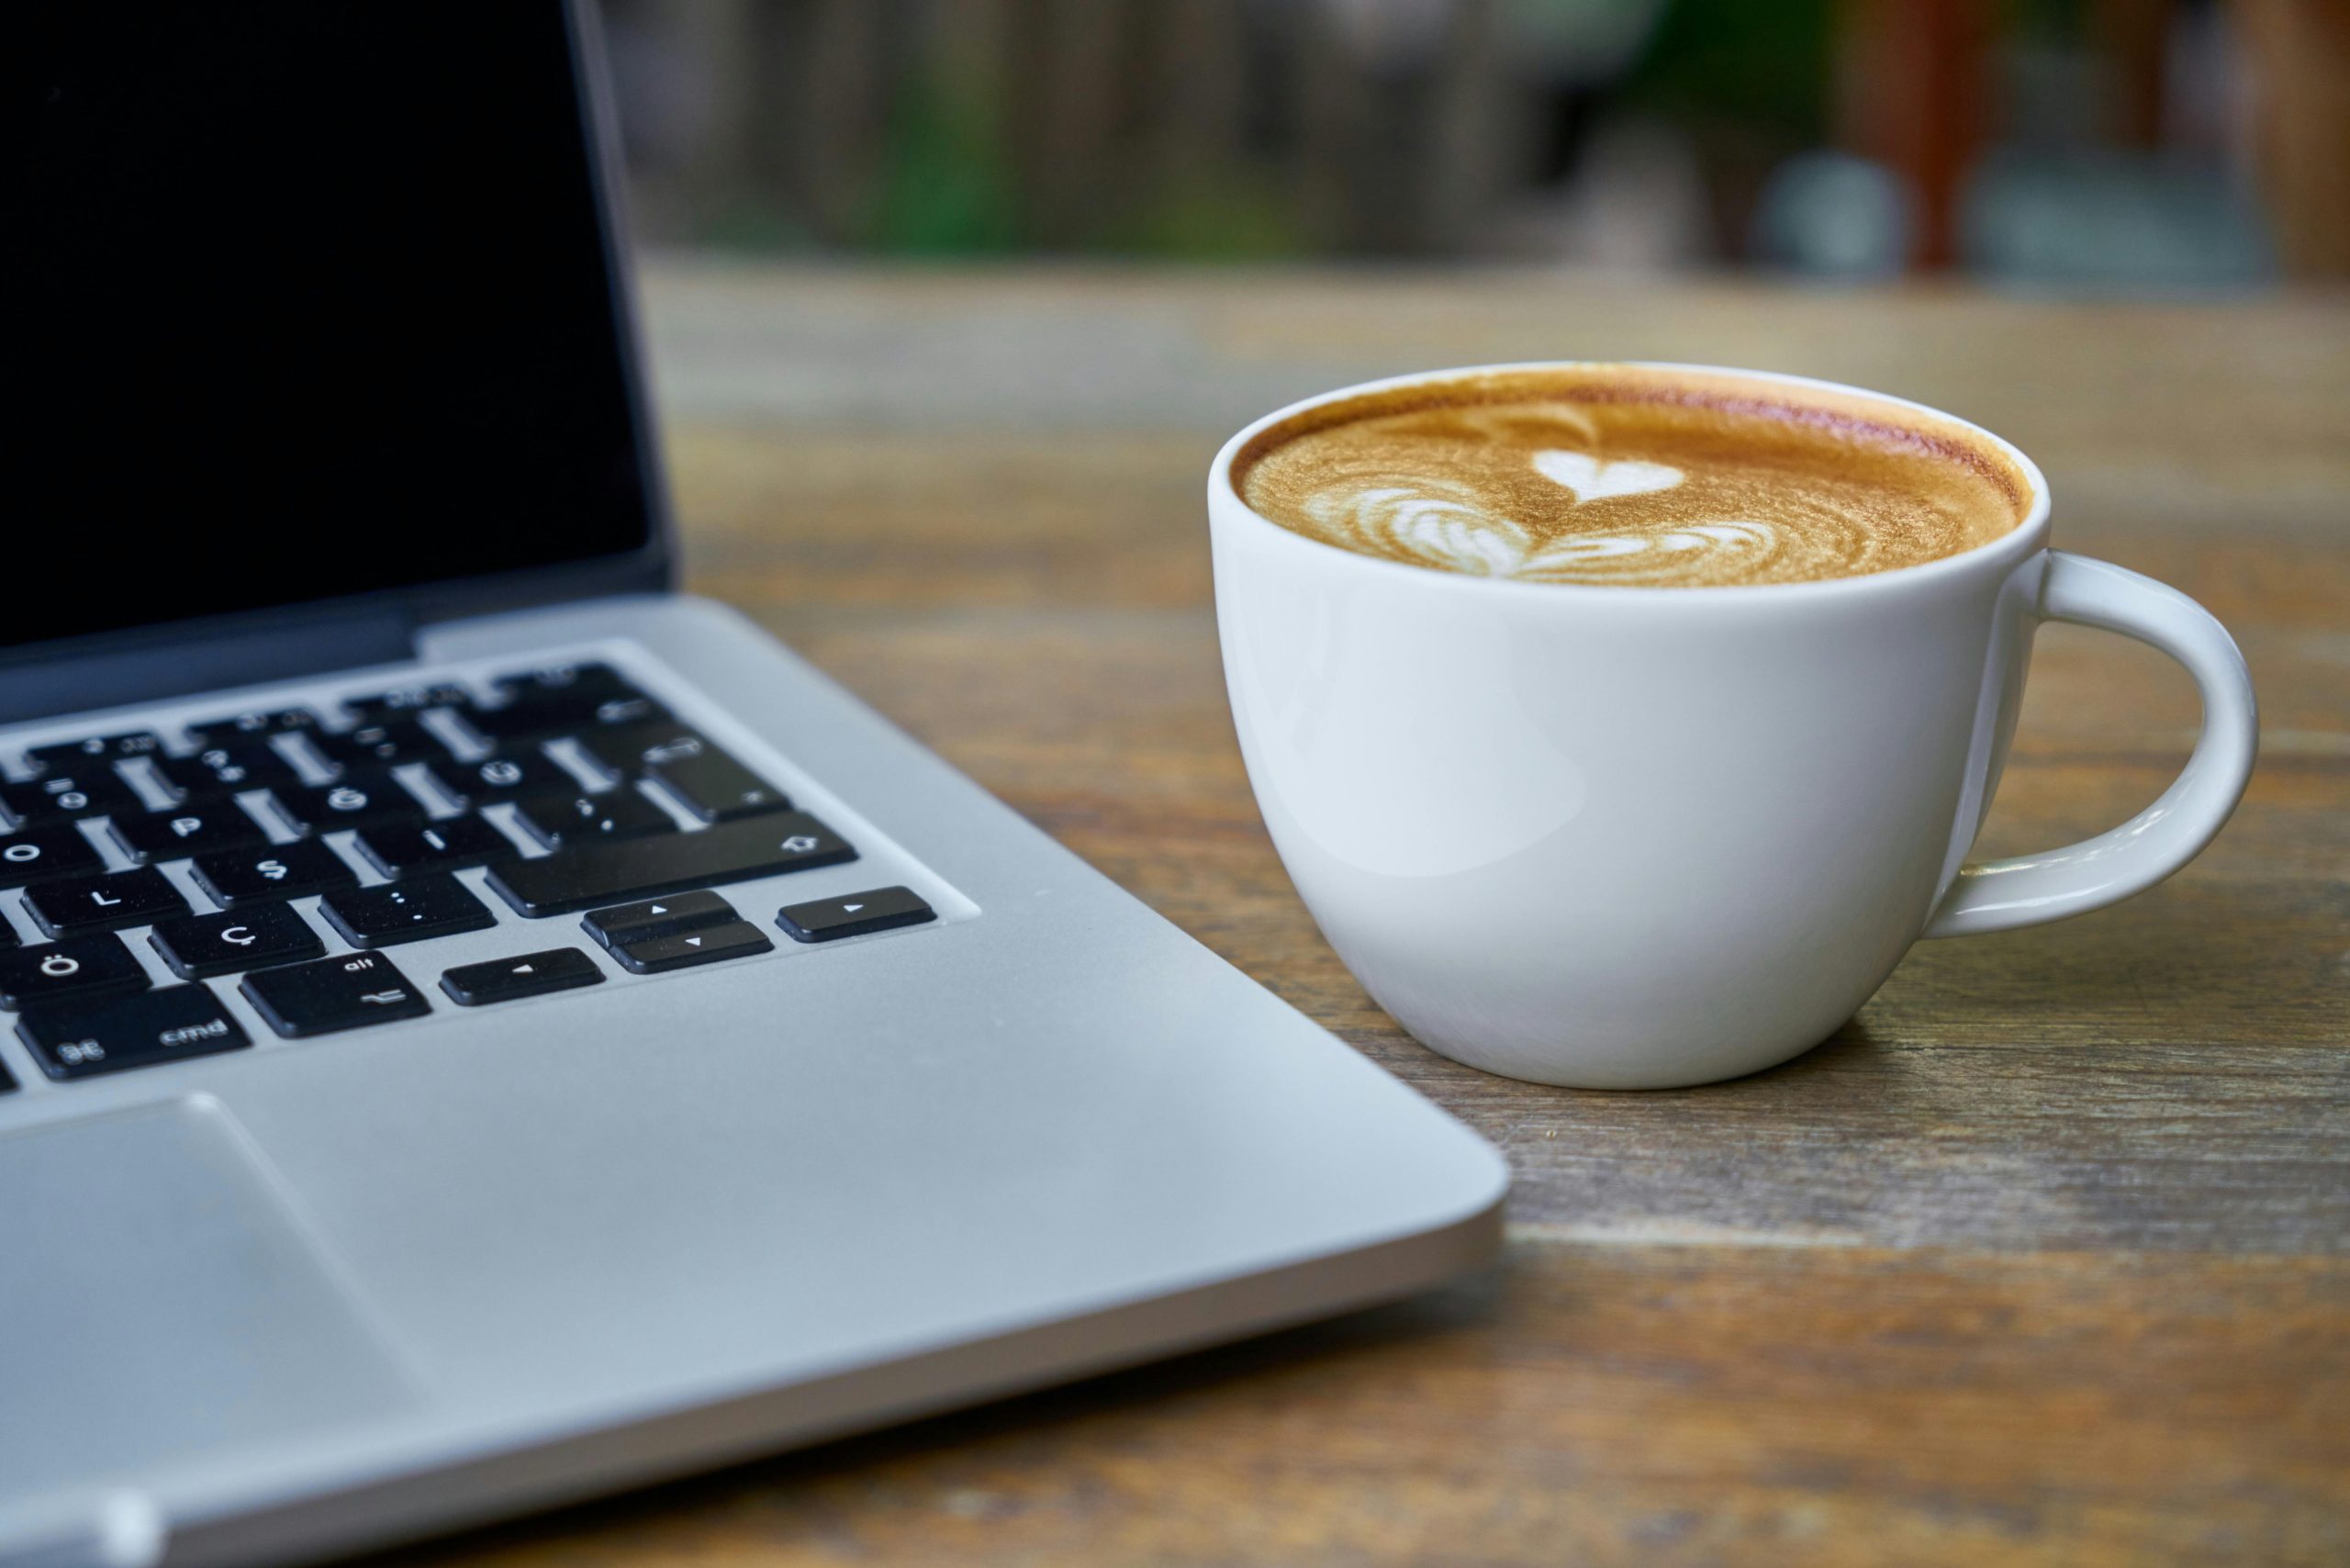 Photo by Pixabay: https://www.pexels.com/photo/teacup-of-latte-beside-macbook-pro-414628/